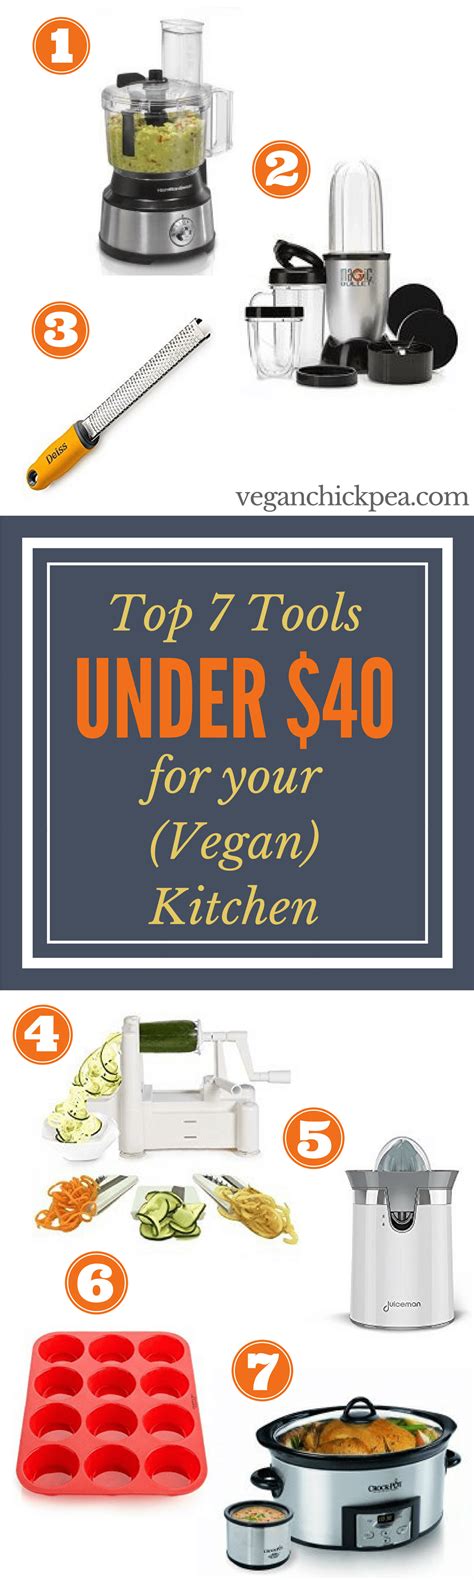 vegan kitchen veganchickpea tools under appliances